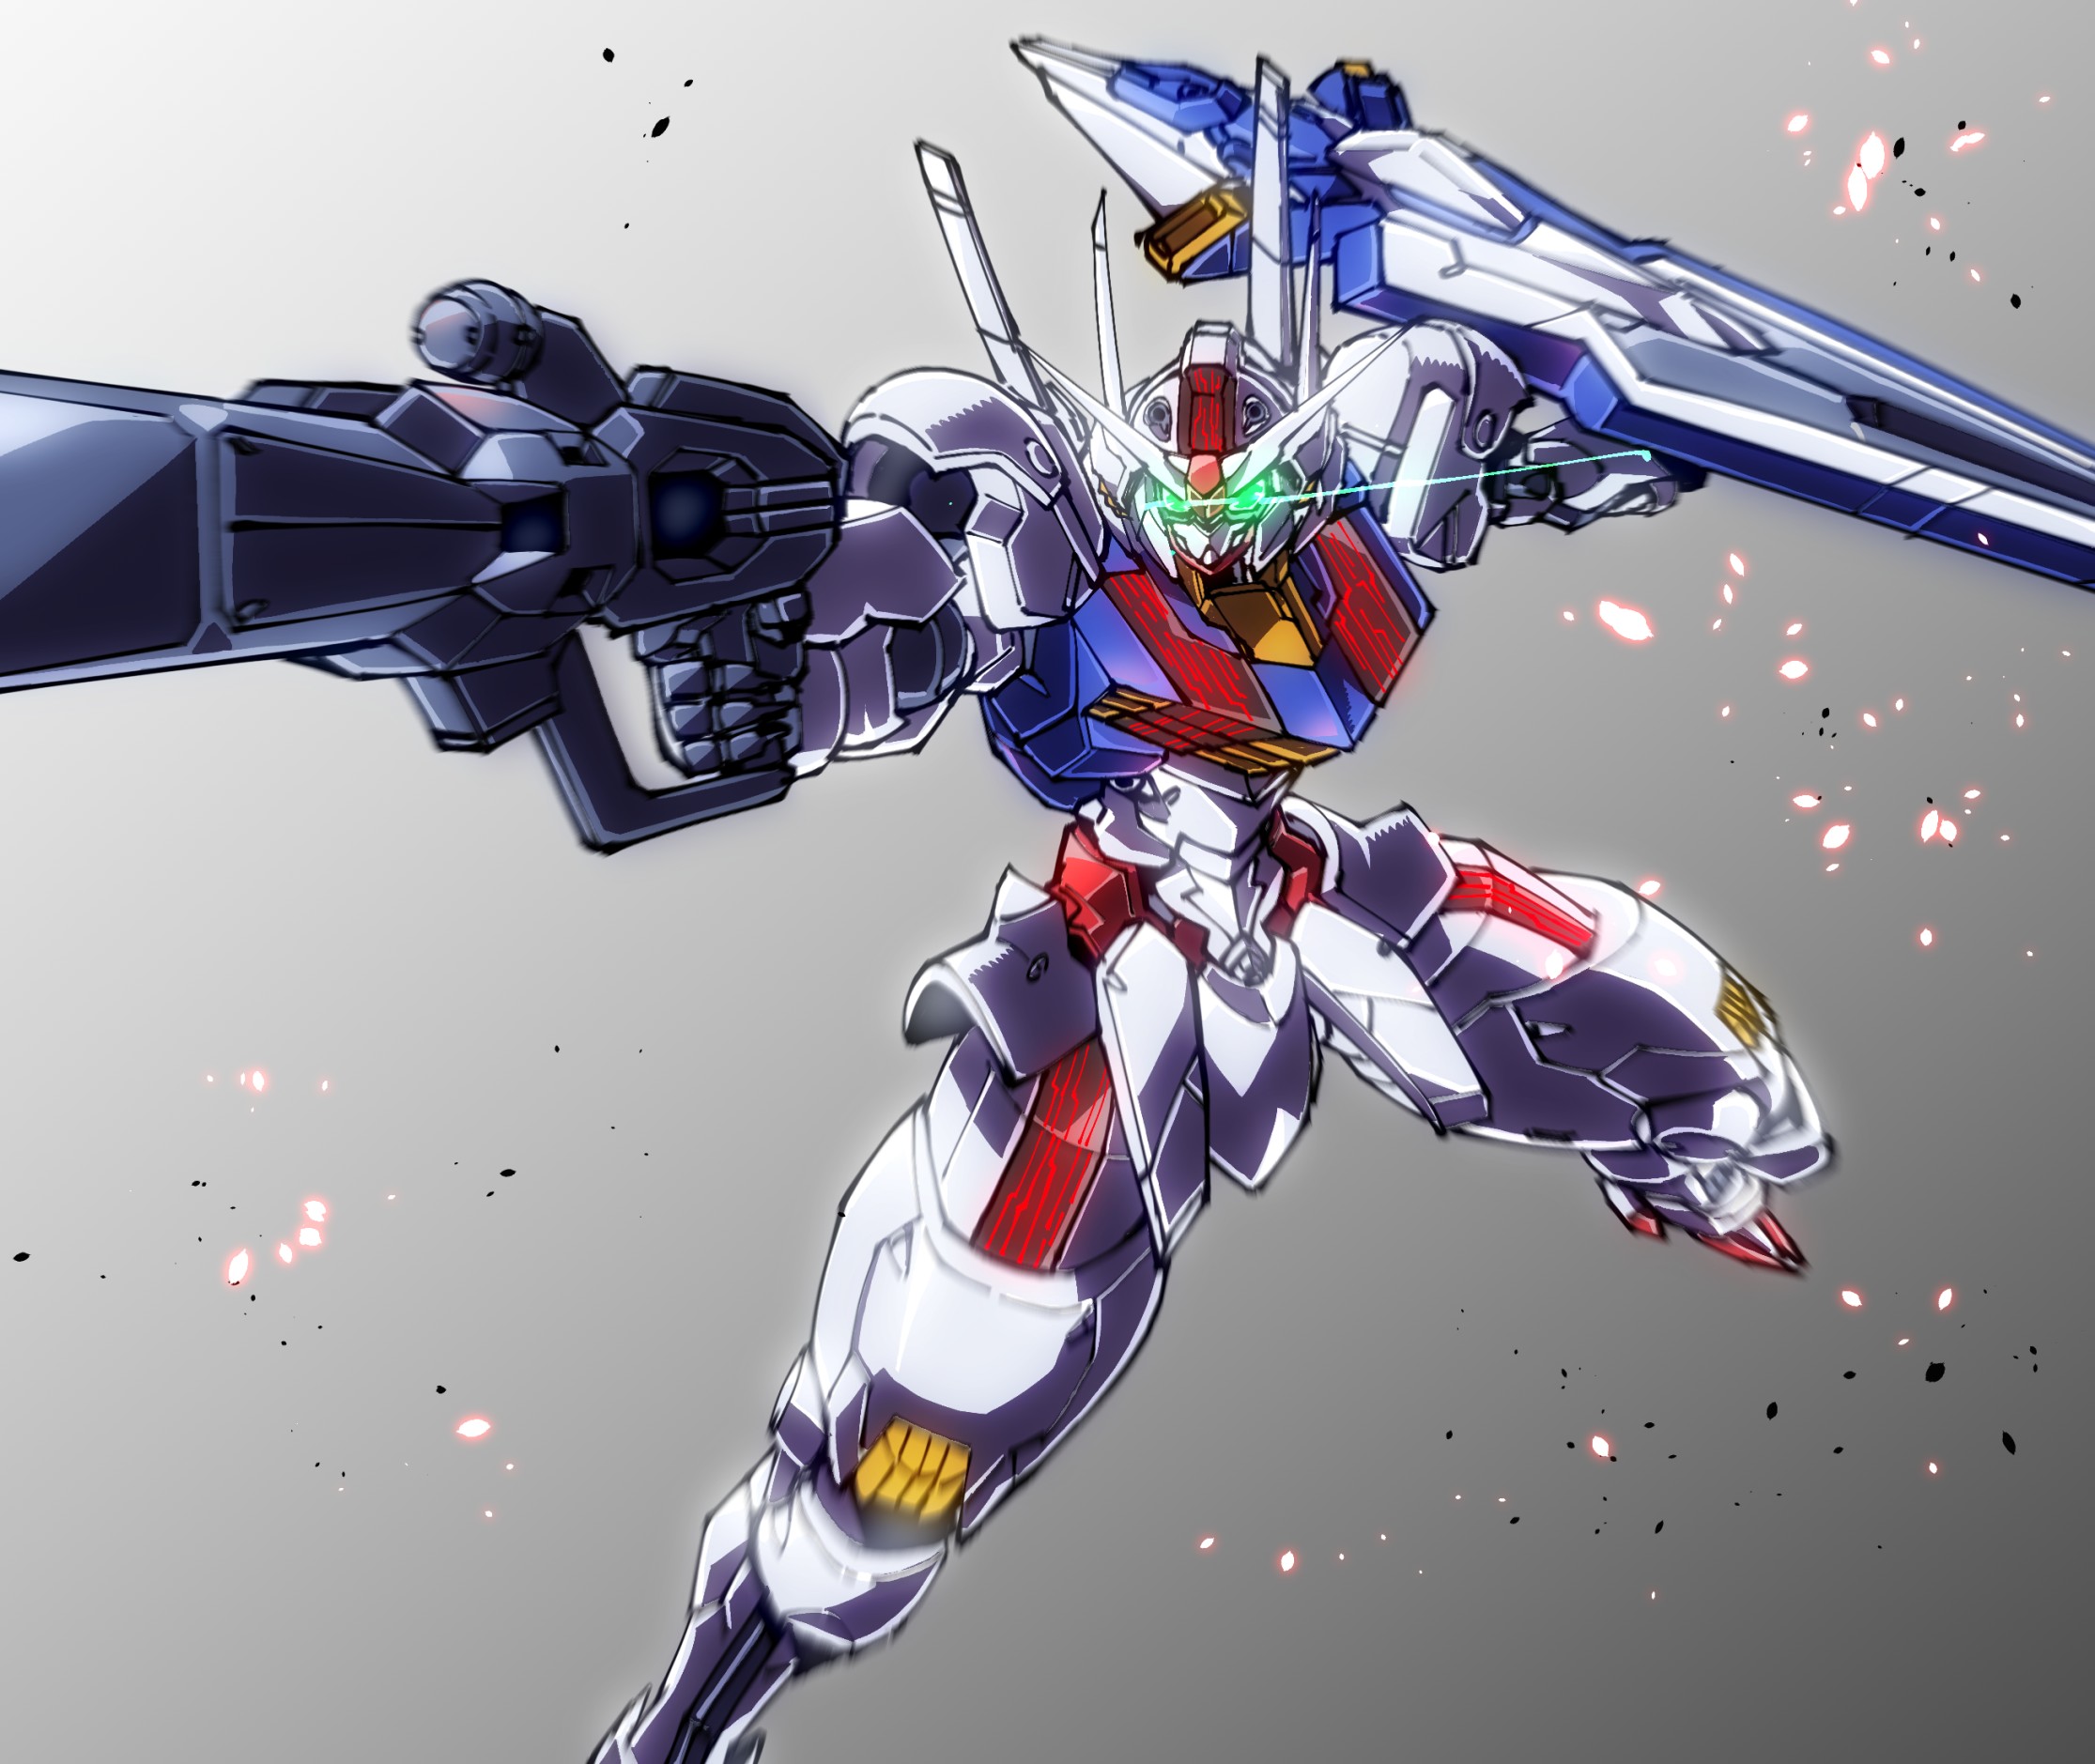 Mobile Suit Gundam THE WiTCH FROM MERCURY Gundam Aerial Anime Mechs Super Robot Wars Gundam Artwork  2231x1879